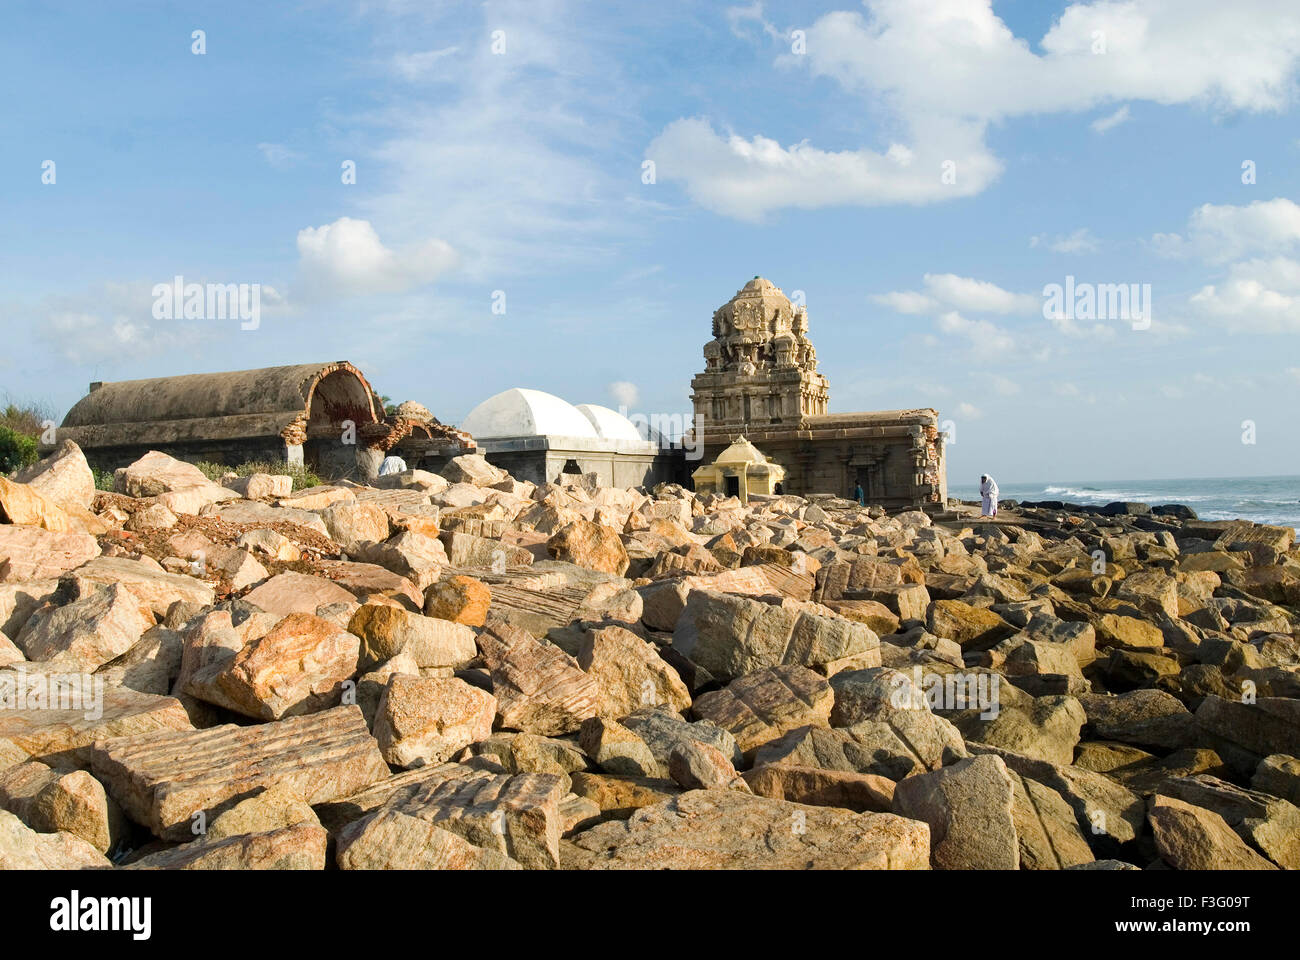 Masilamaninathar tempio costruito nel 1305 Annuncio in Tarangambadi ; Tamil Nadu ; India Foto Stock